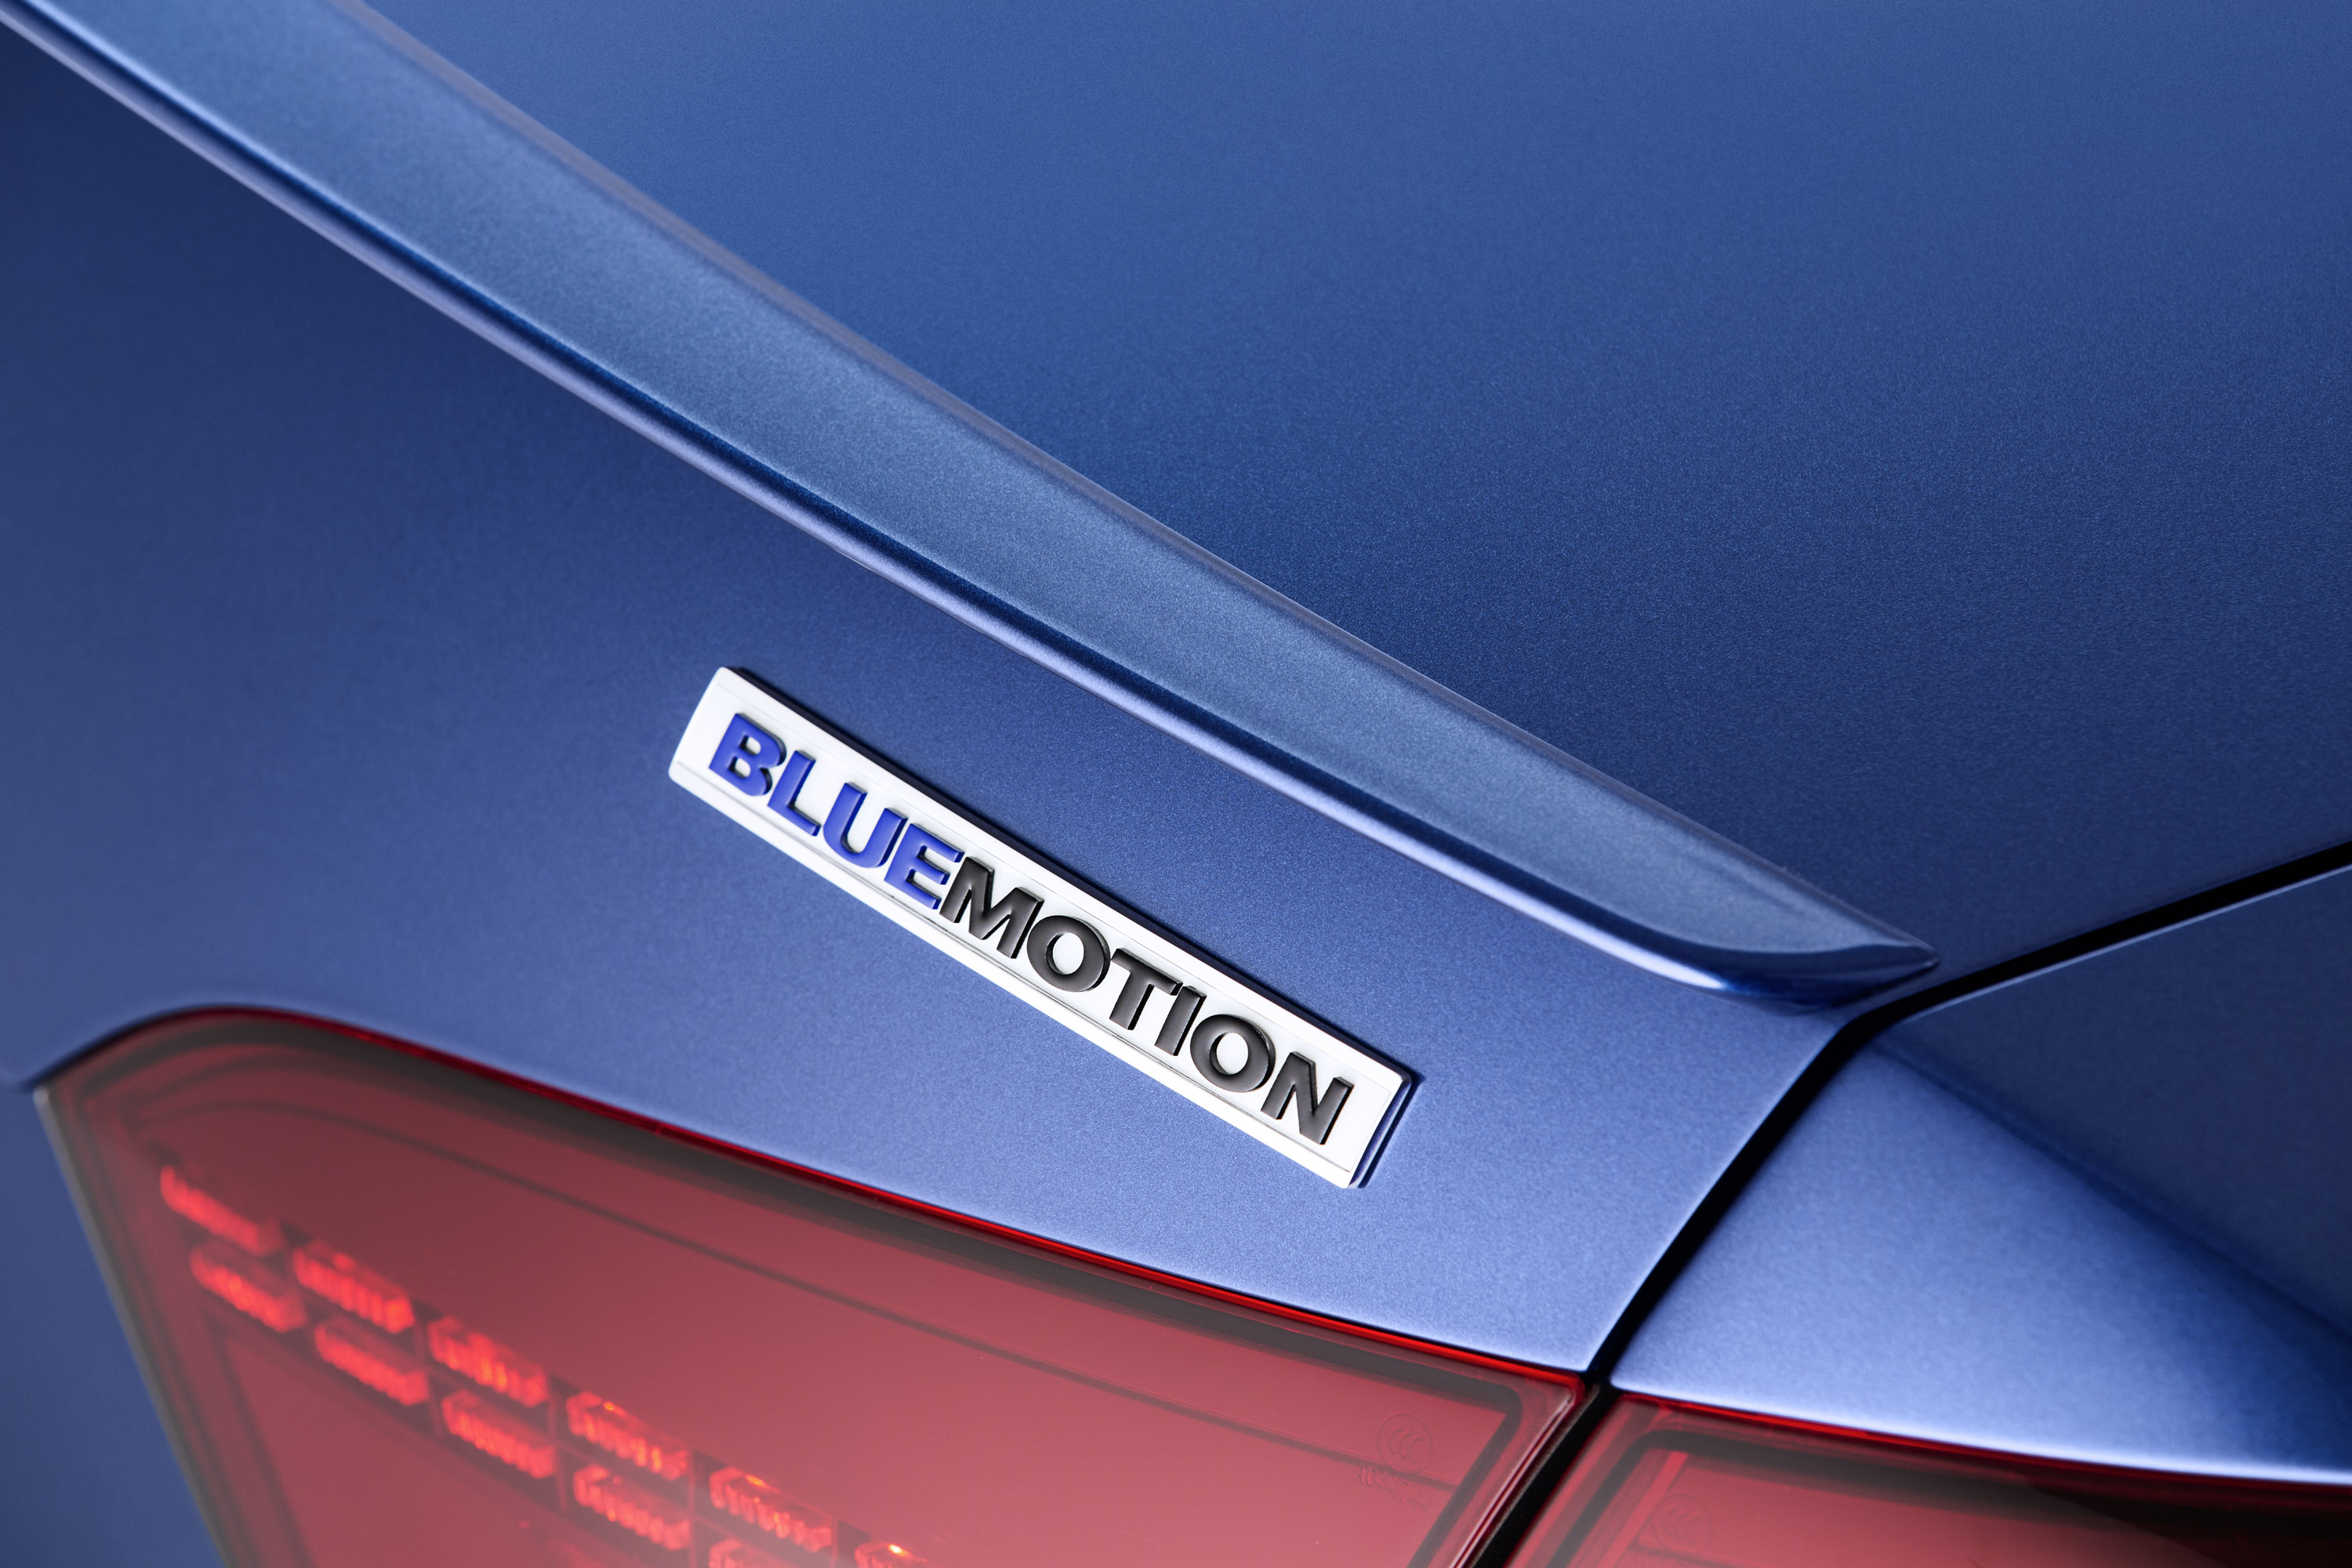 Volkswagen Passat Blue Motion Concept